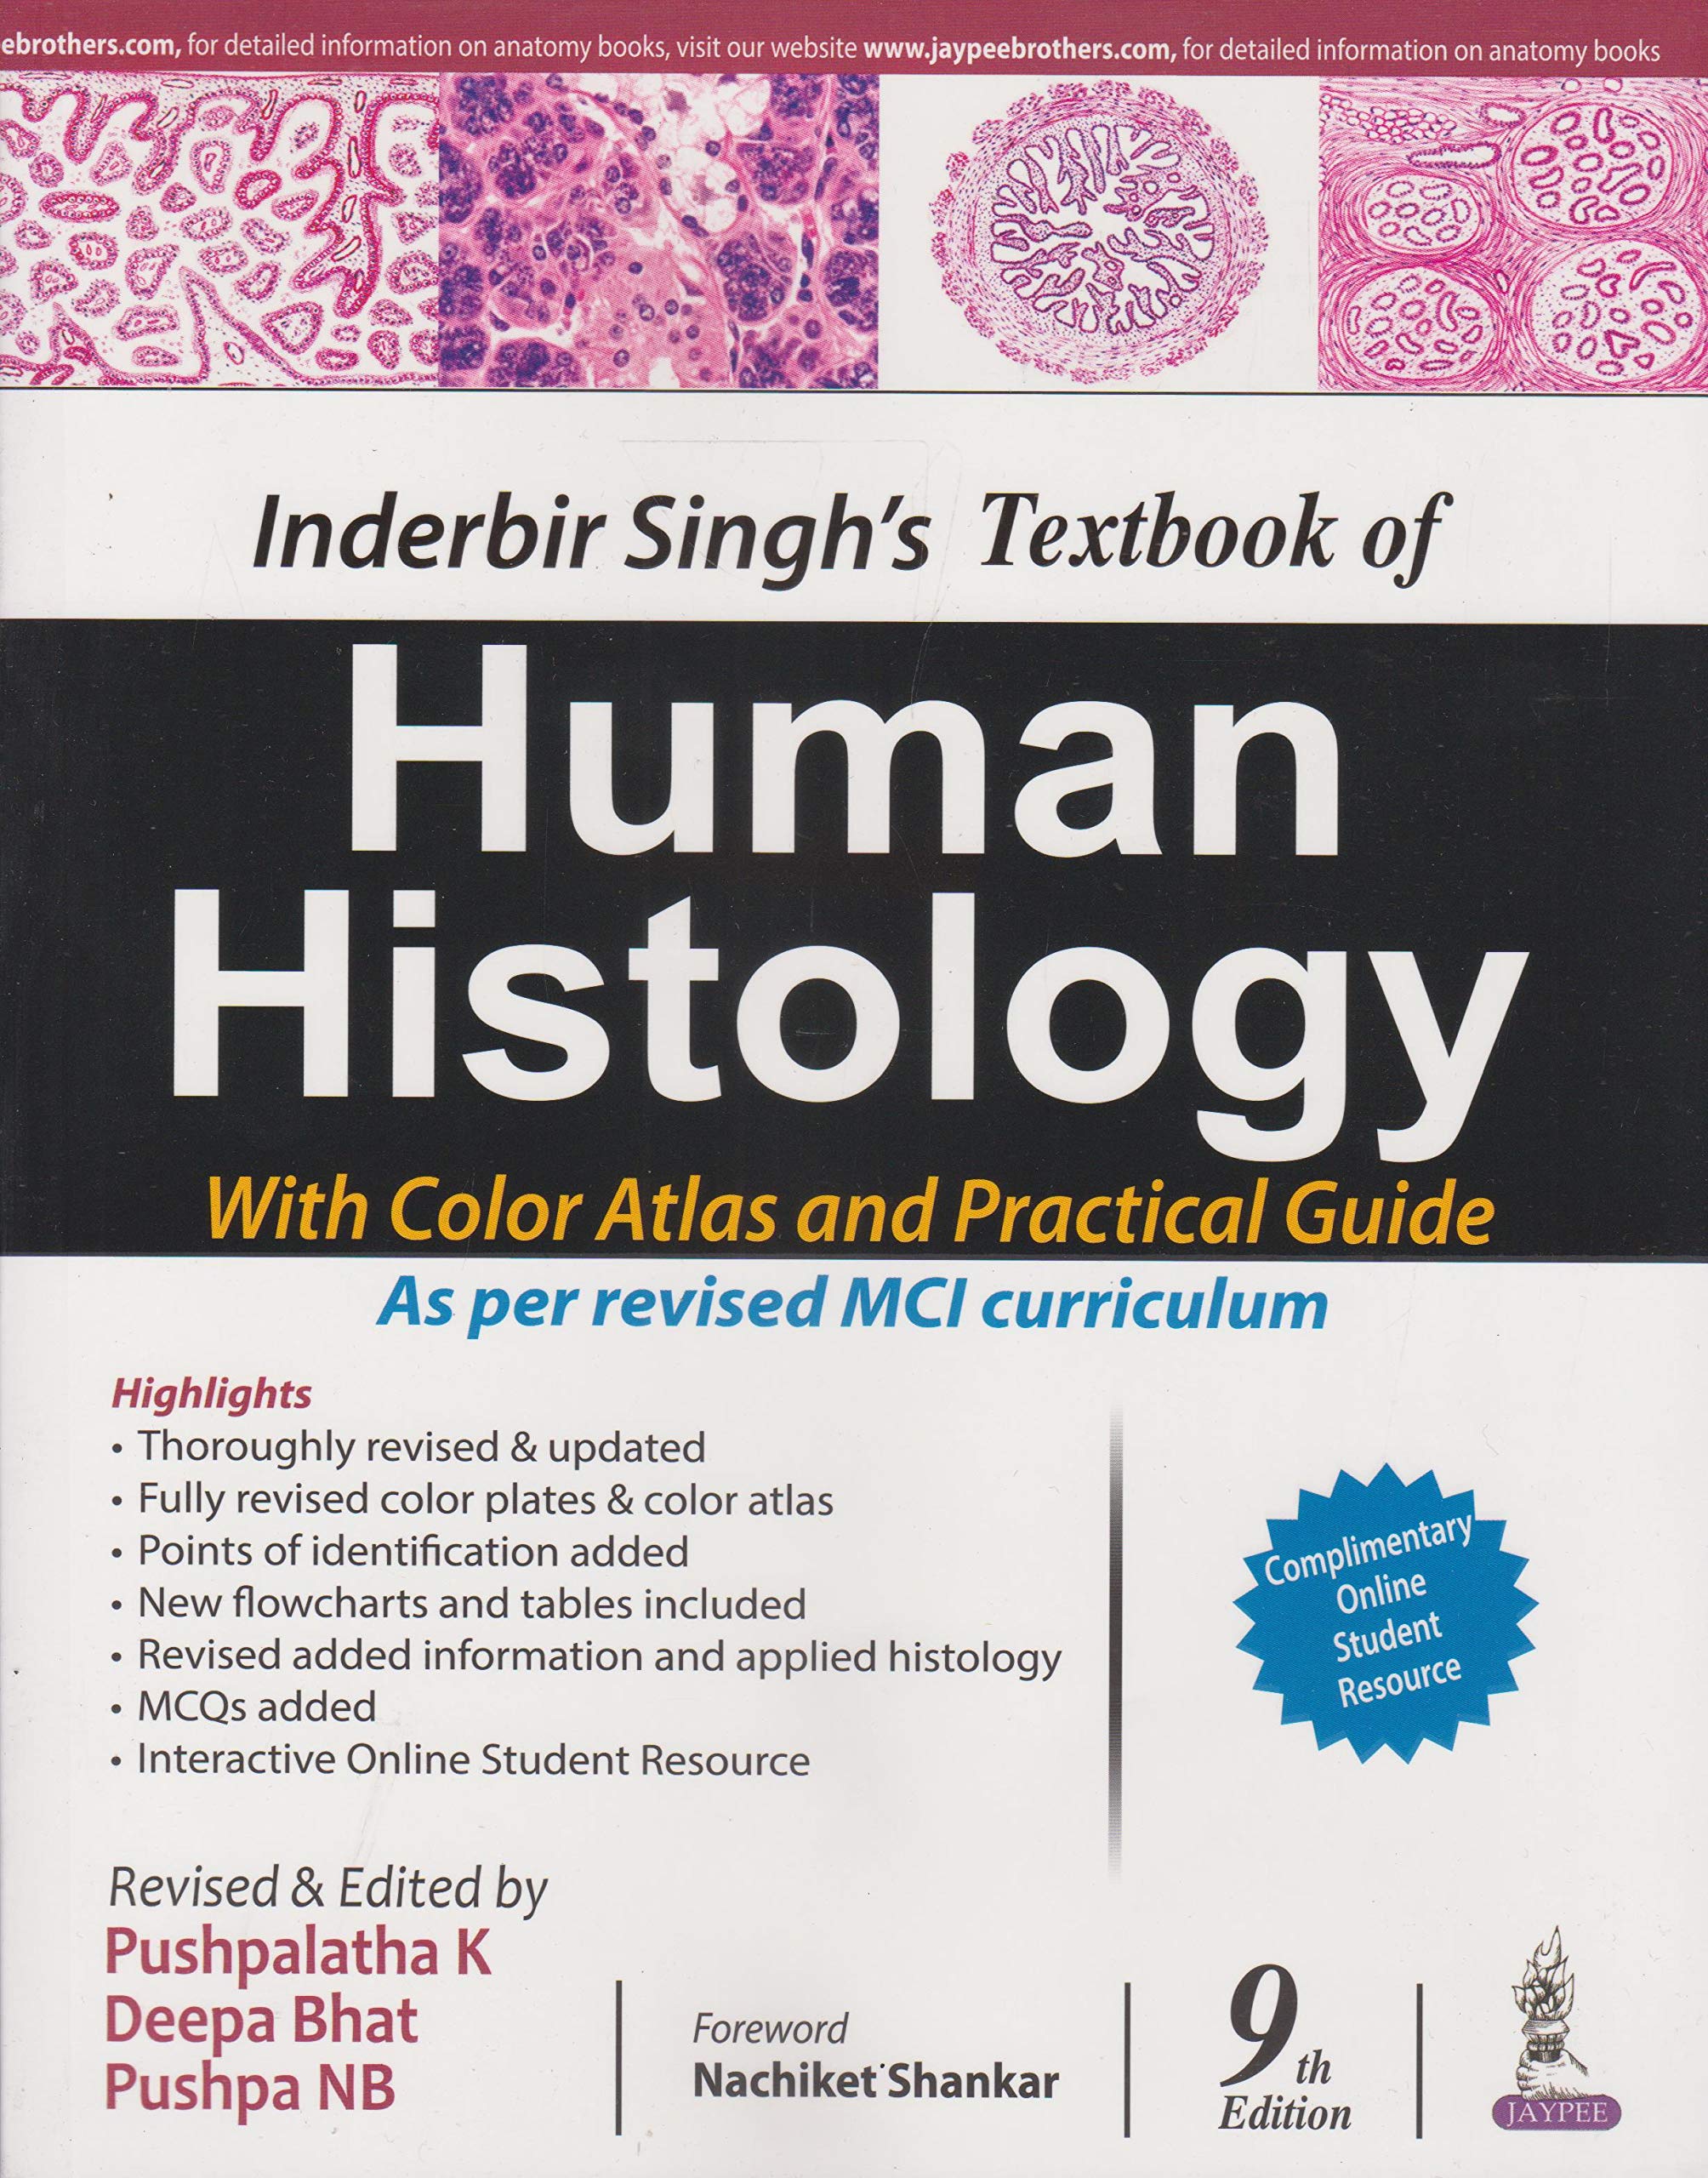 Inderbir Singh textbook of Human Histology